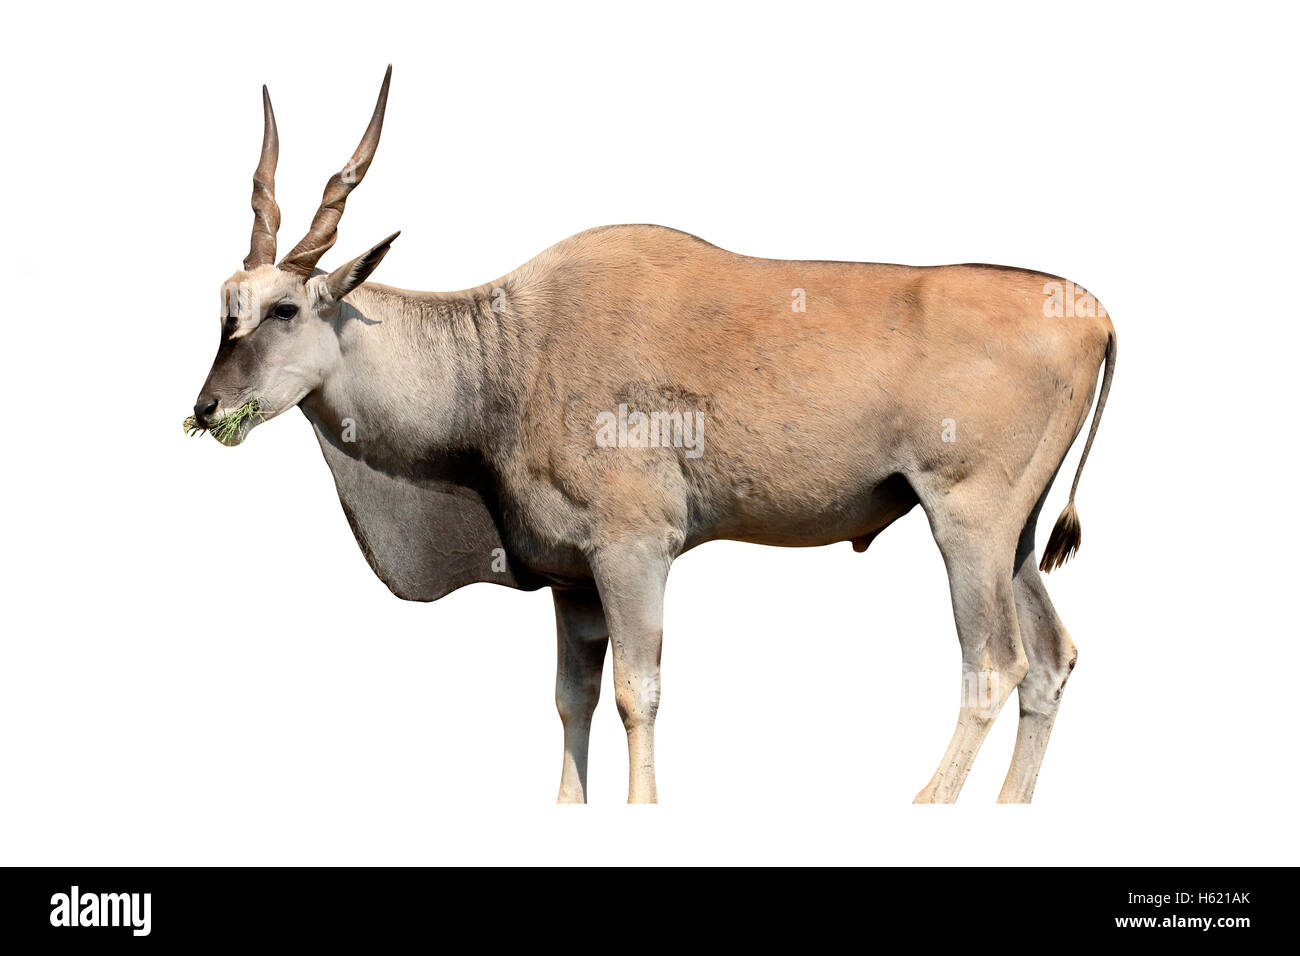 Eland, Taurotragus oryx, single mammal, South Africa, August 2015 Stock Photo